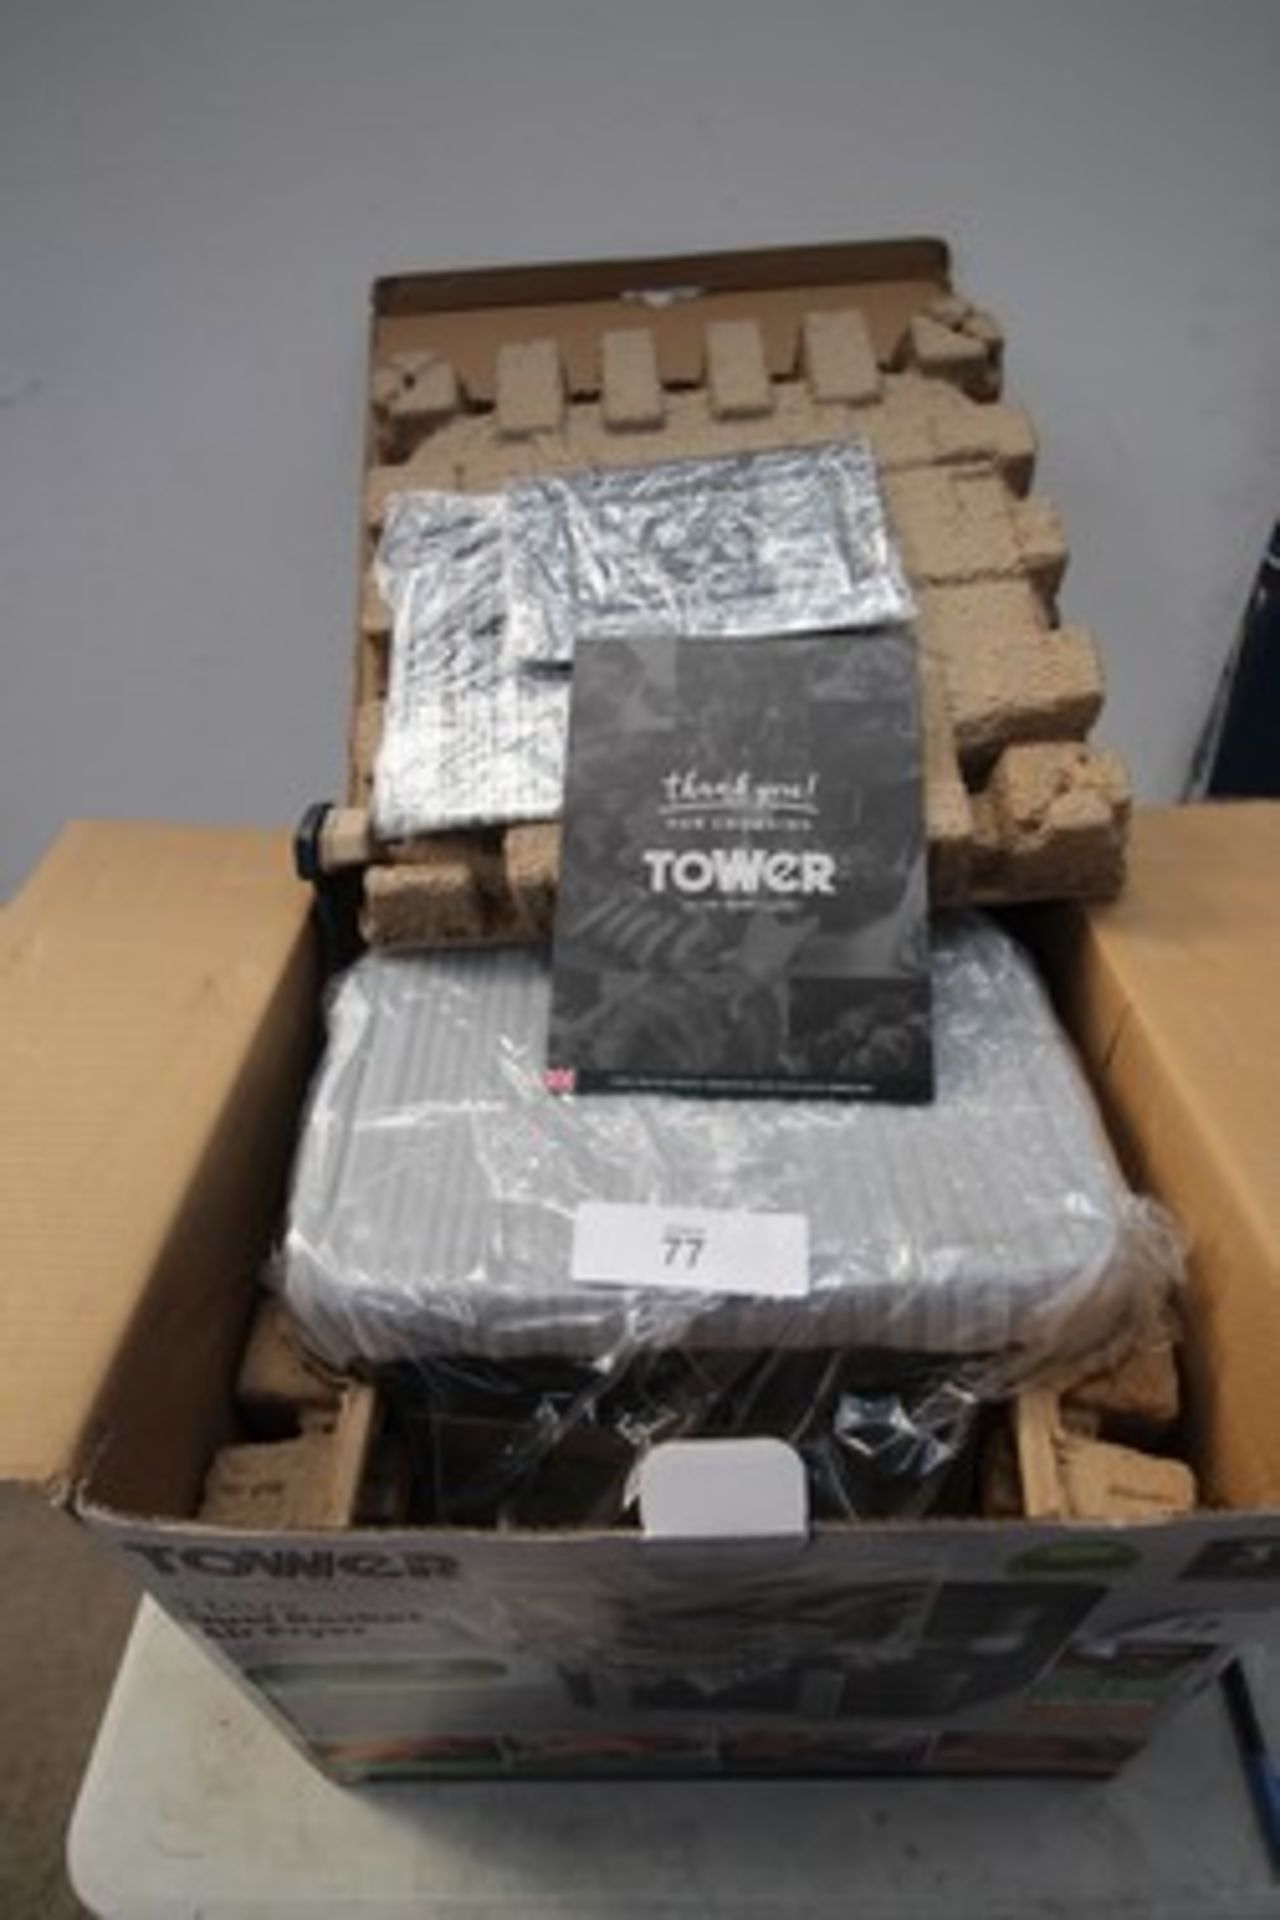 1 x Tower 9L dual basket Vortx air fryer, model: TT7088, EAN: 5056462312996 - new in box (ES14)